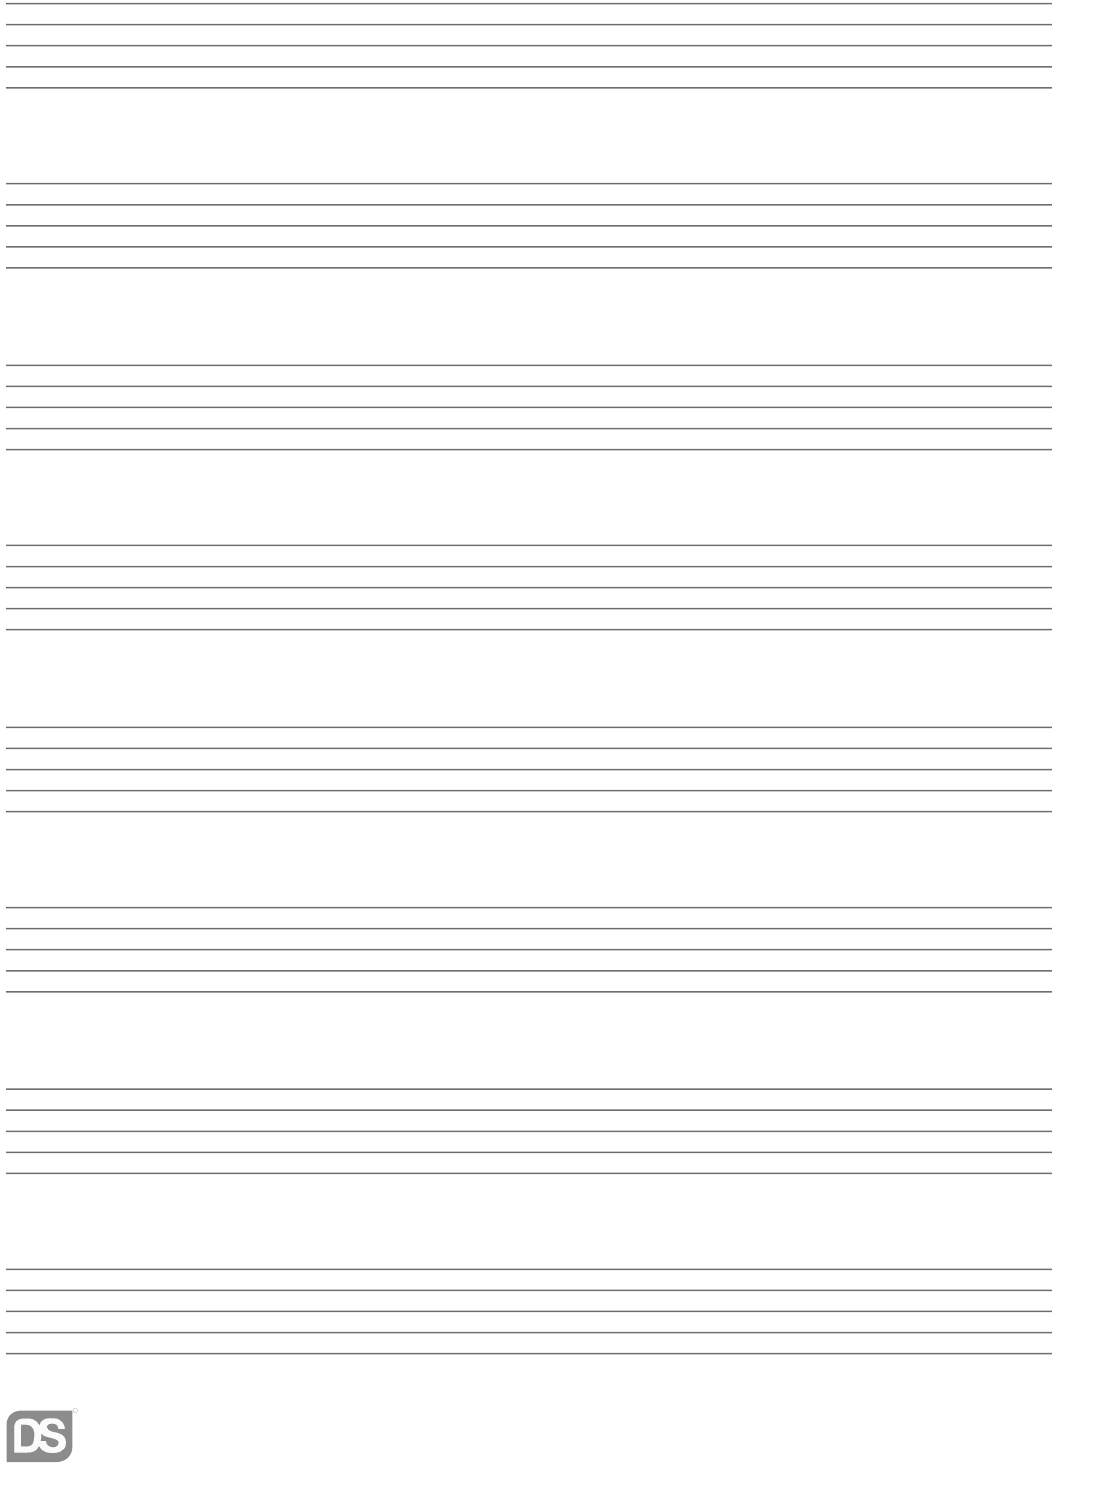 Large Print Blank Sheet Music (Manuscript) Paper Pdf | Print+Blank+ - Free Printable Staff Paper Blank Sheet Music Net